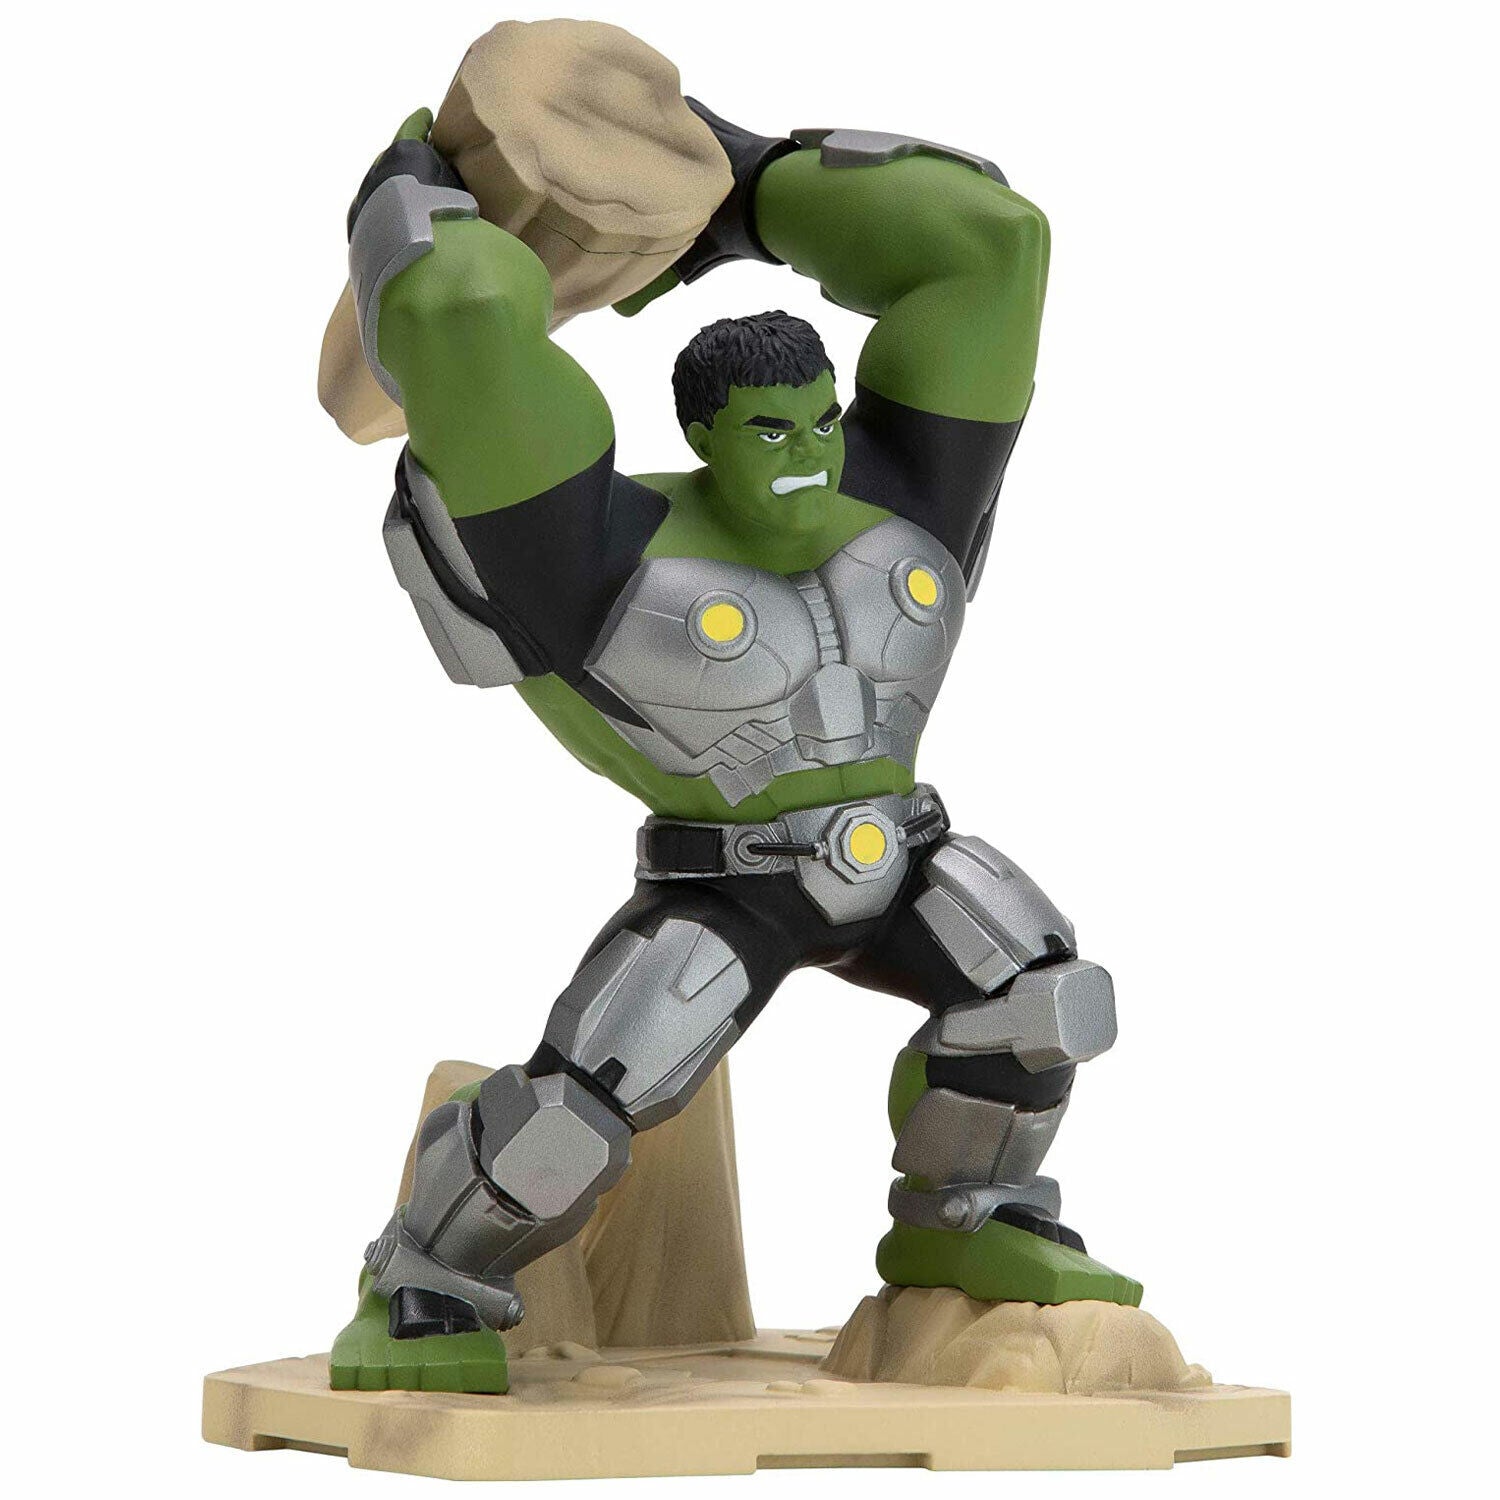 Zoteki Marvel Avengers Hulk #002 Collectible Figure - 4-Inch Series 1